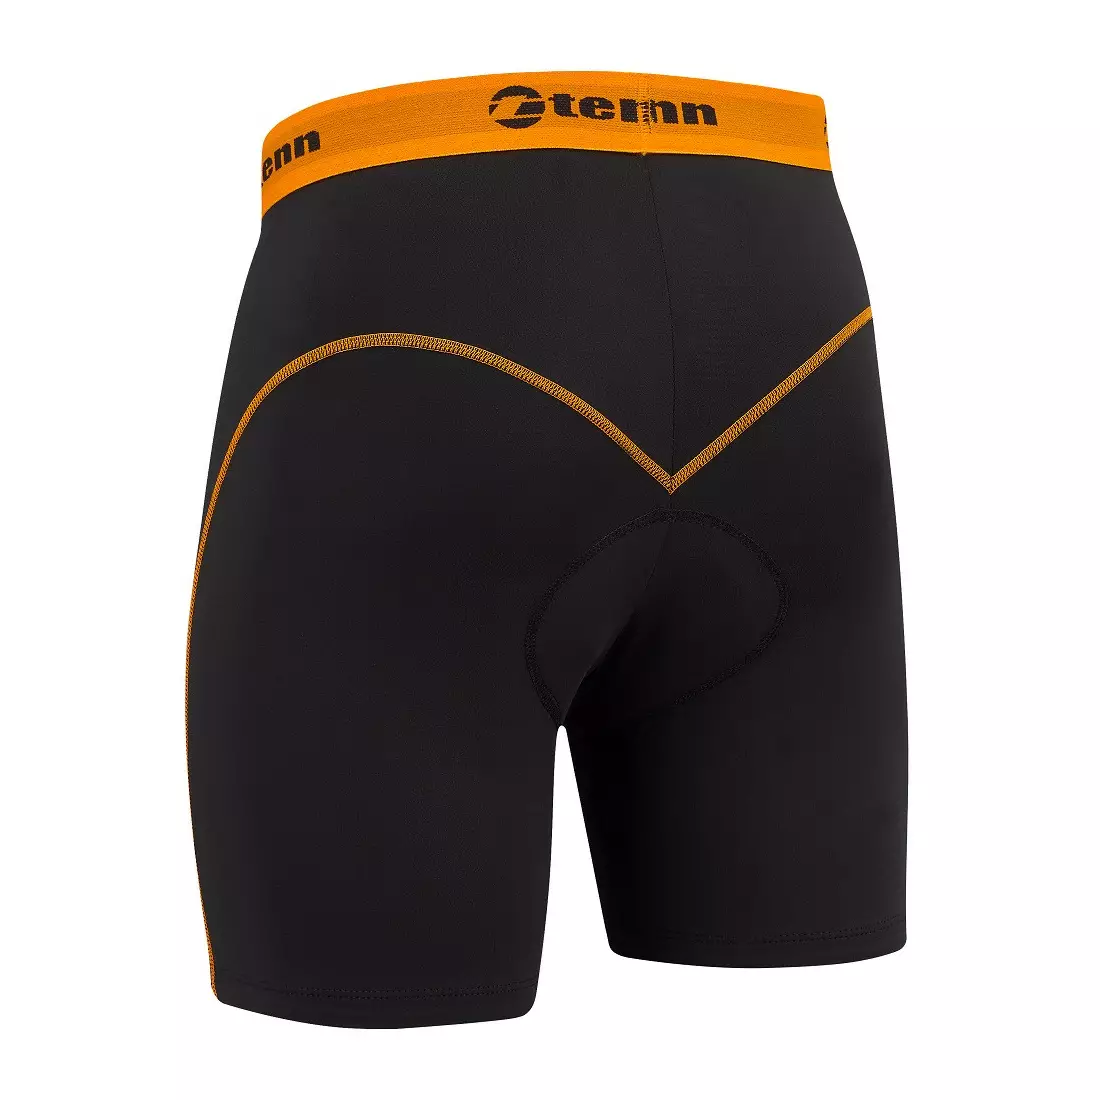 Pánské cyklistické boxerky TENN OUTDOORS COOLFLO černé a oranžové